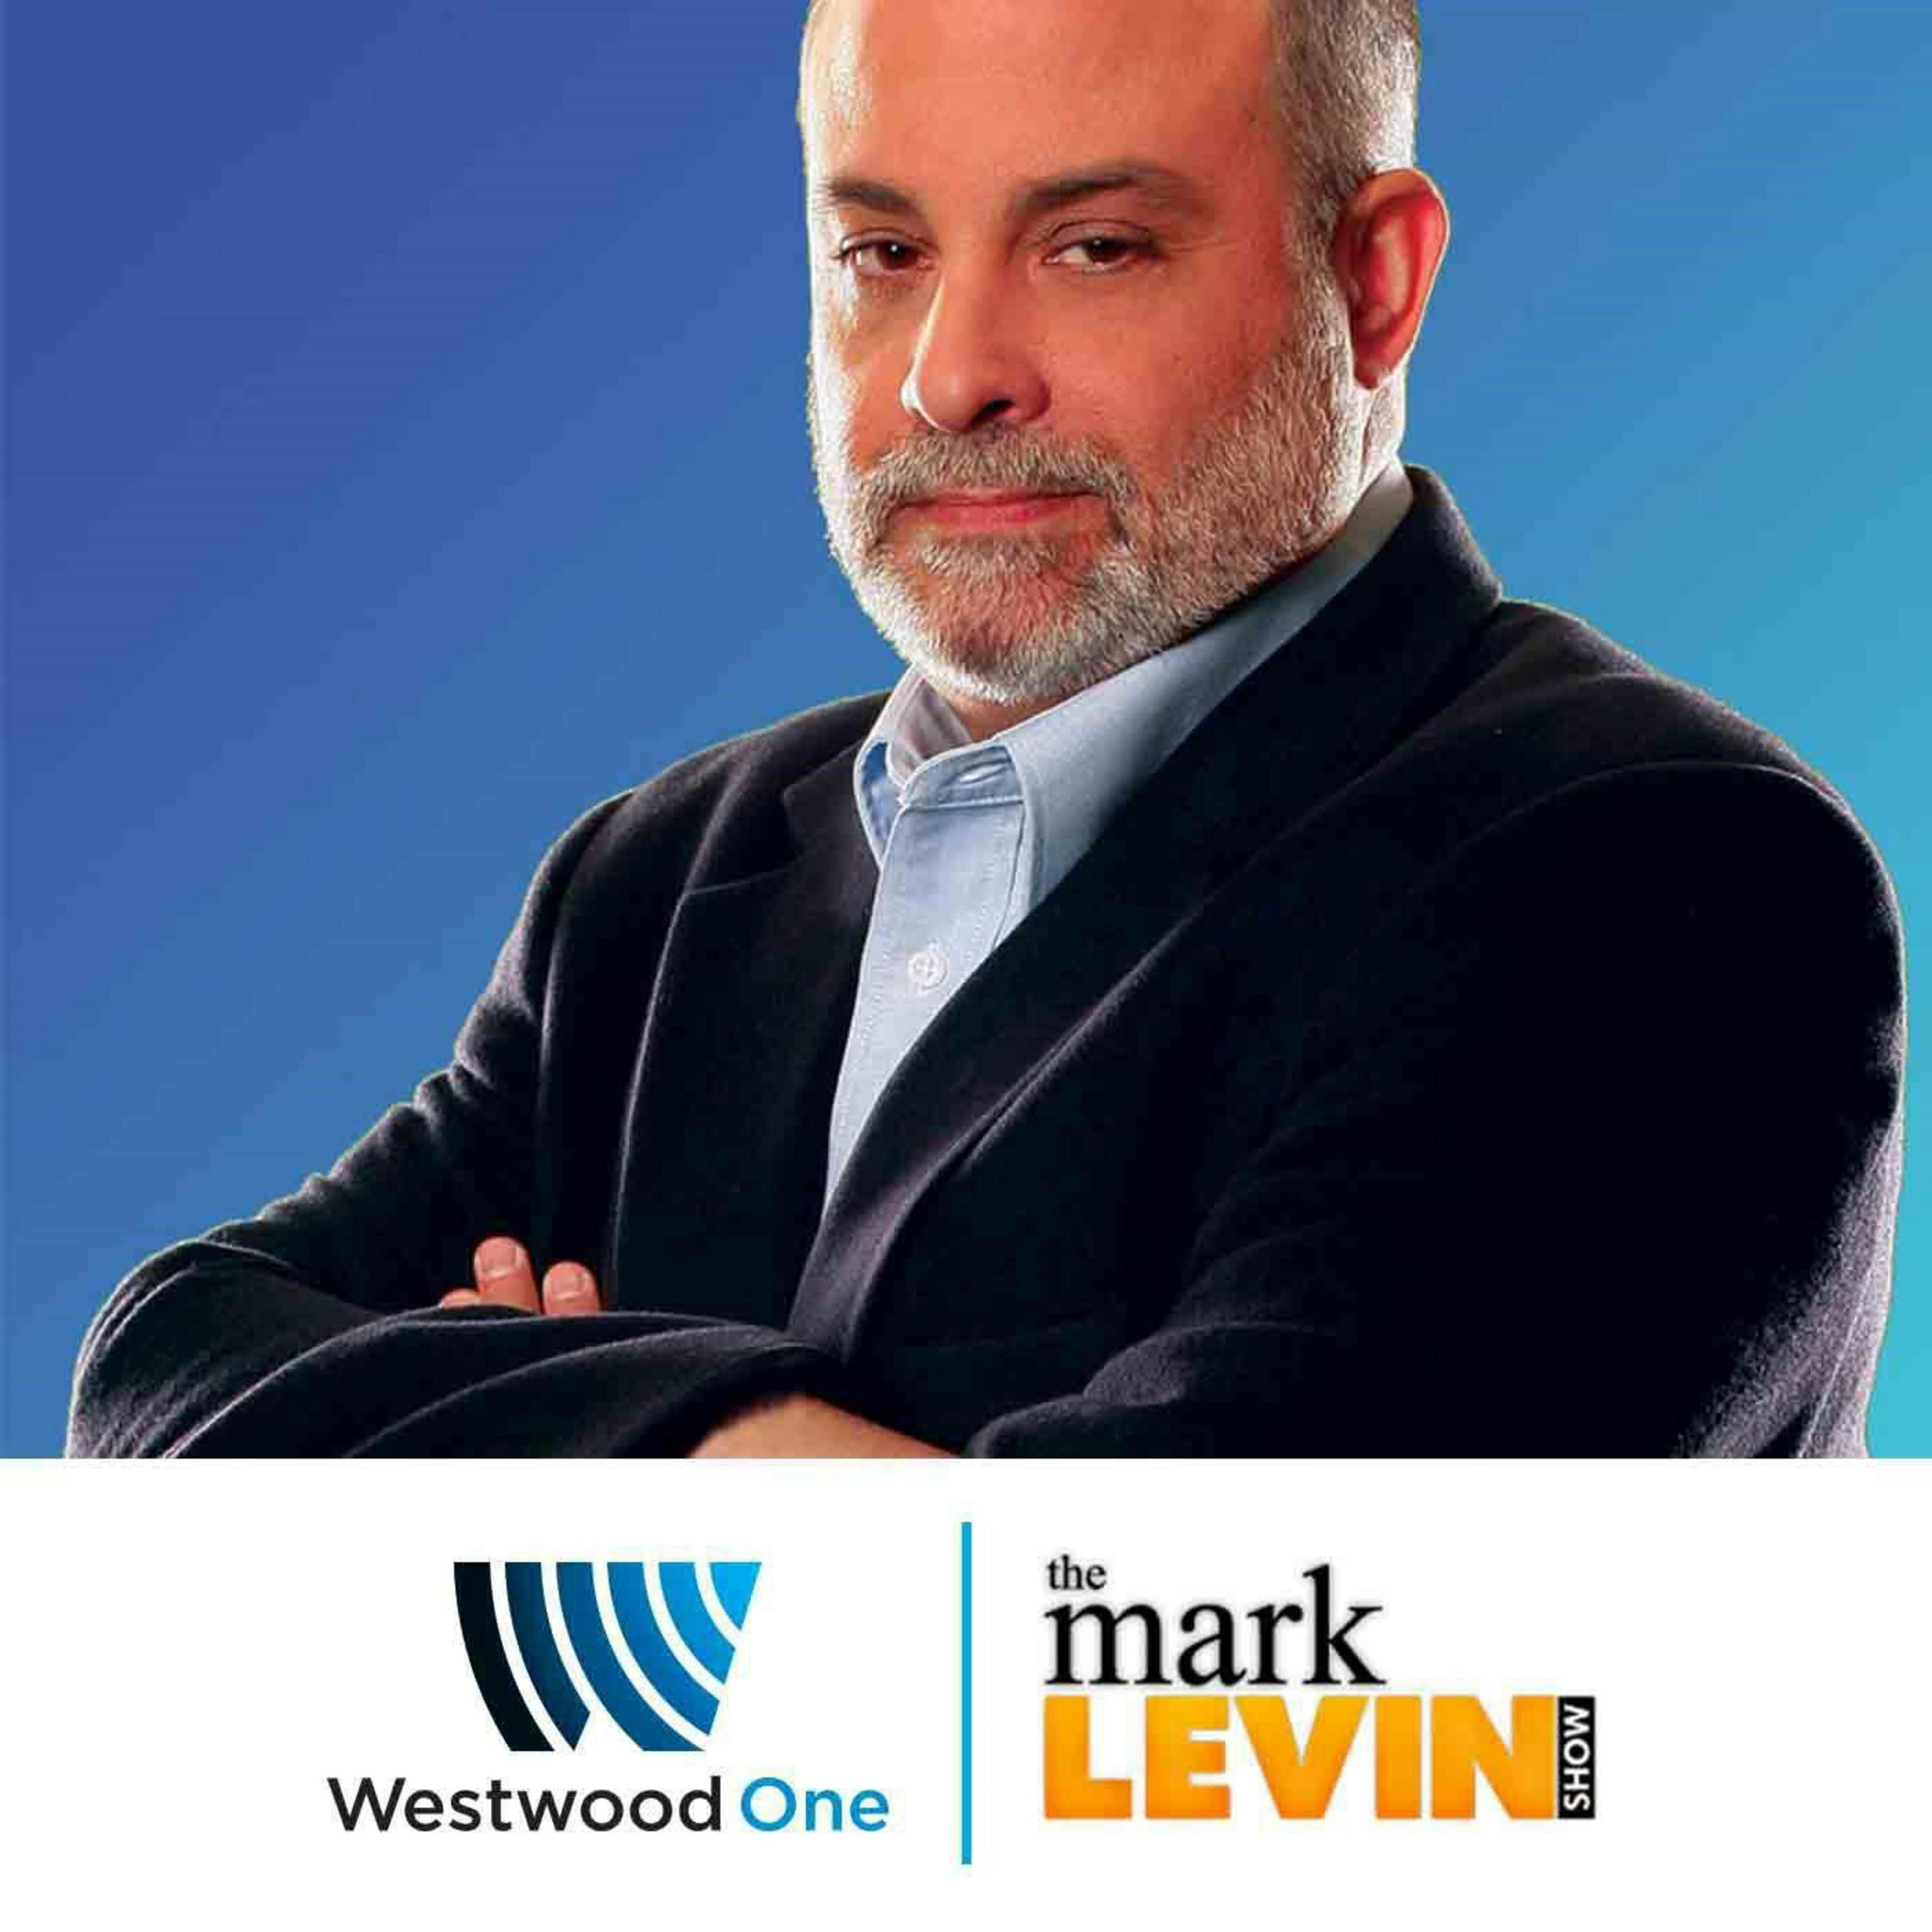 10/20/17-Mark Levin Audio Rewind